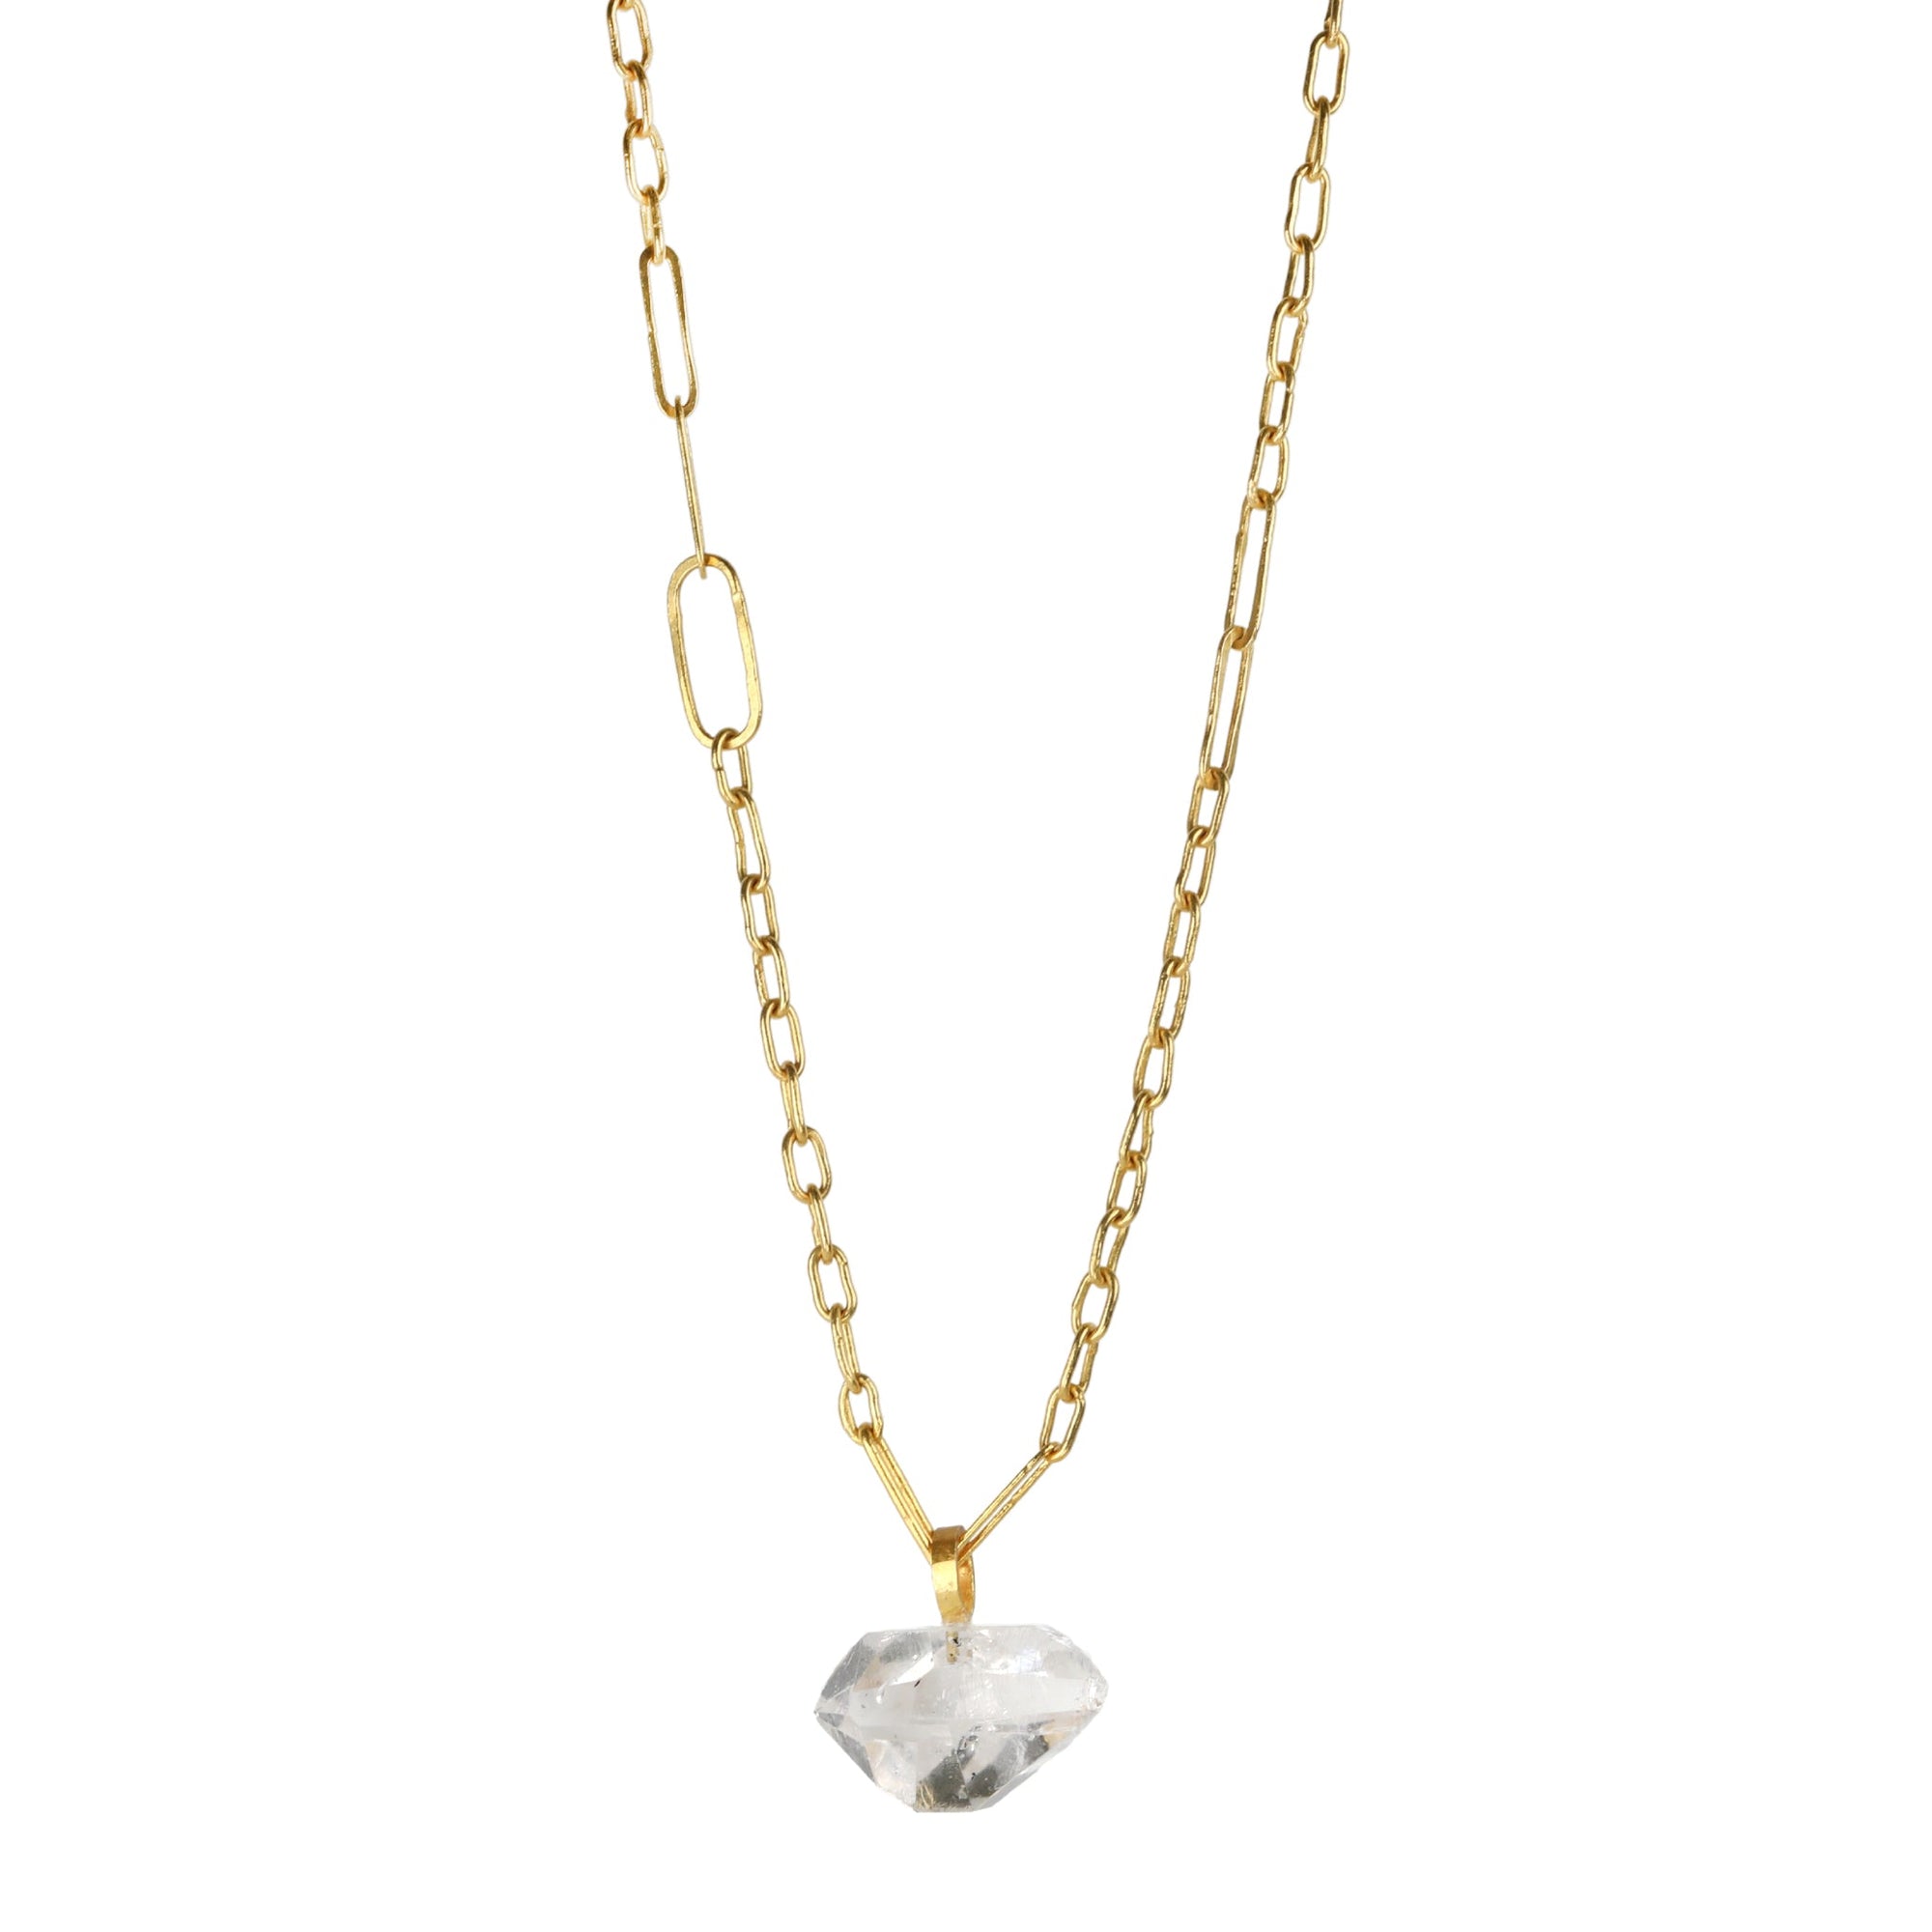 Herkimer &quot;Diamond&quot; Quartz Pendant with 22K Gold Bale - Peridot Fine Jewelry - Rosanne Pugliese